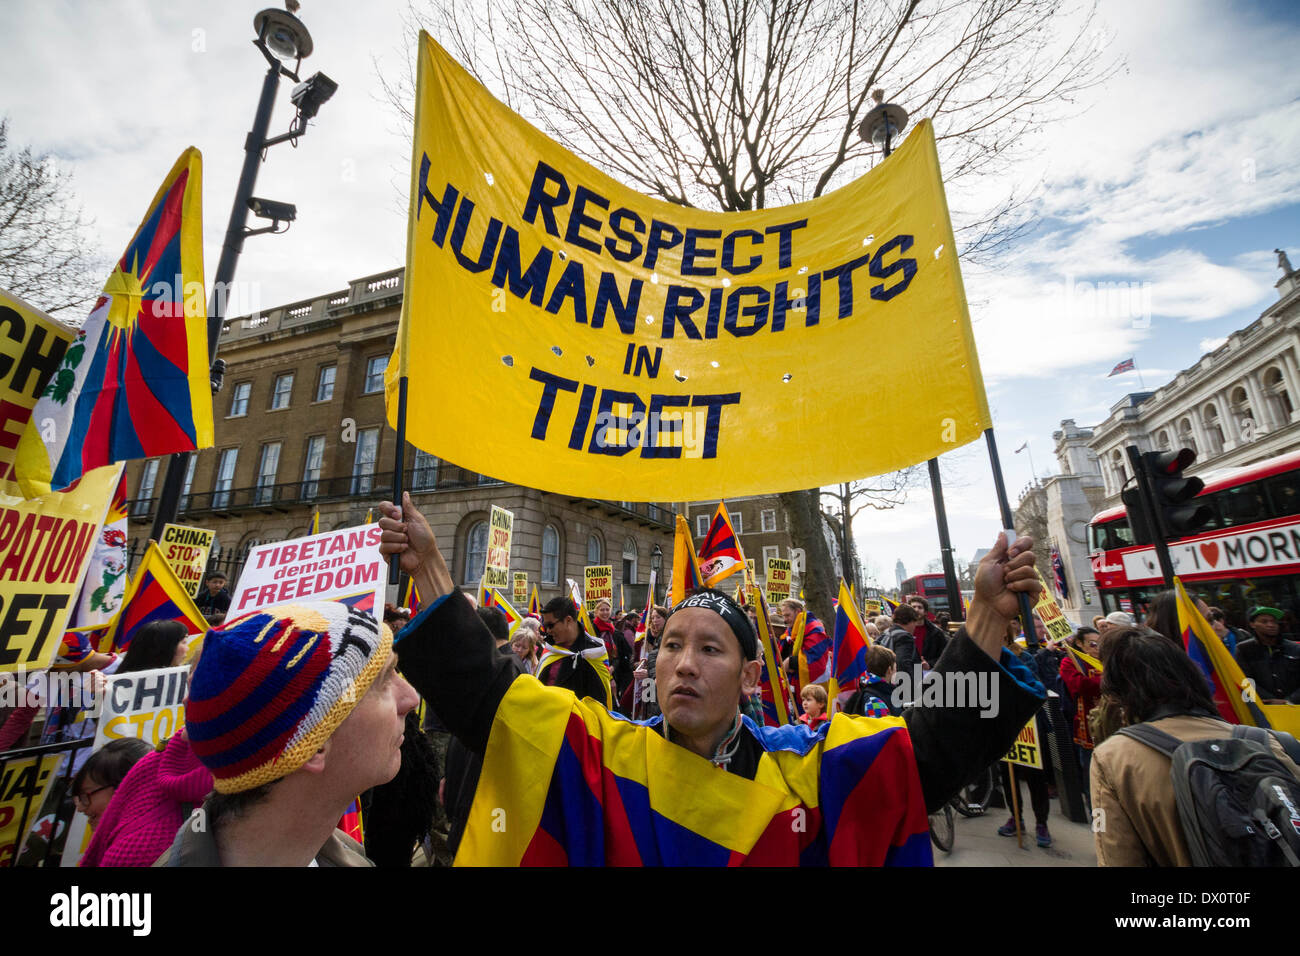 Tibet annuale marcia di protesta per la libertà da occupazione cinese a Londra Foto Stock